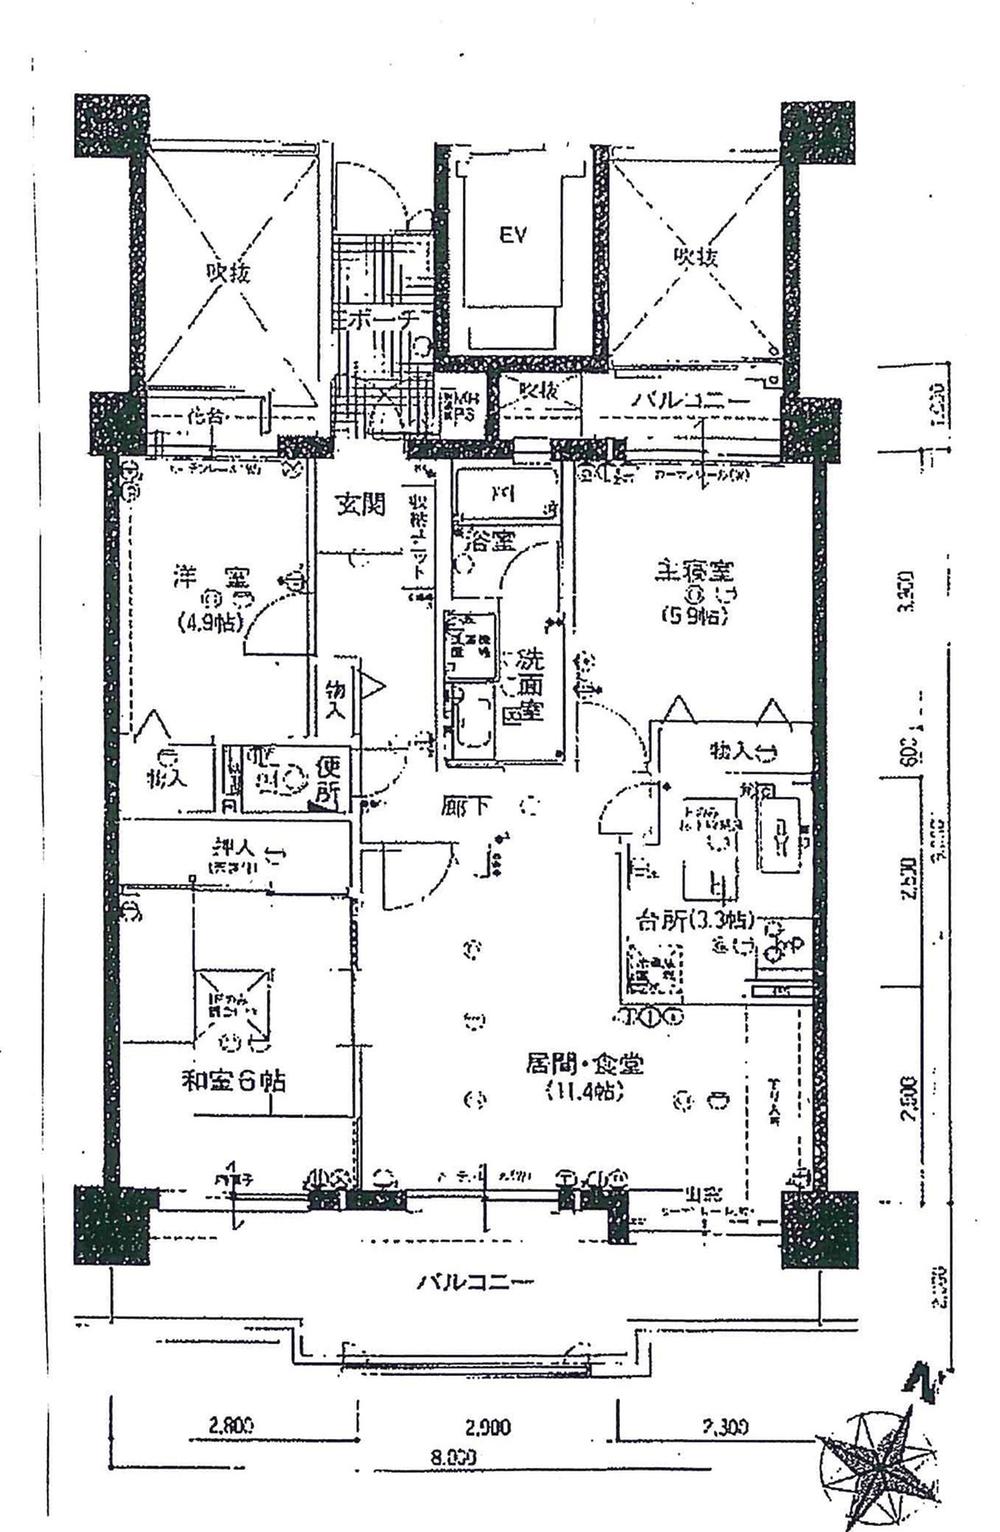 Floor plan. 3LDK, Price 13.5 million yen, Footprint 72.6 sq m